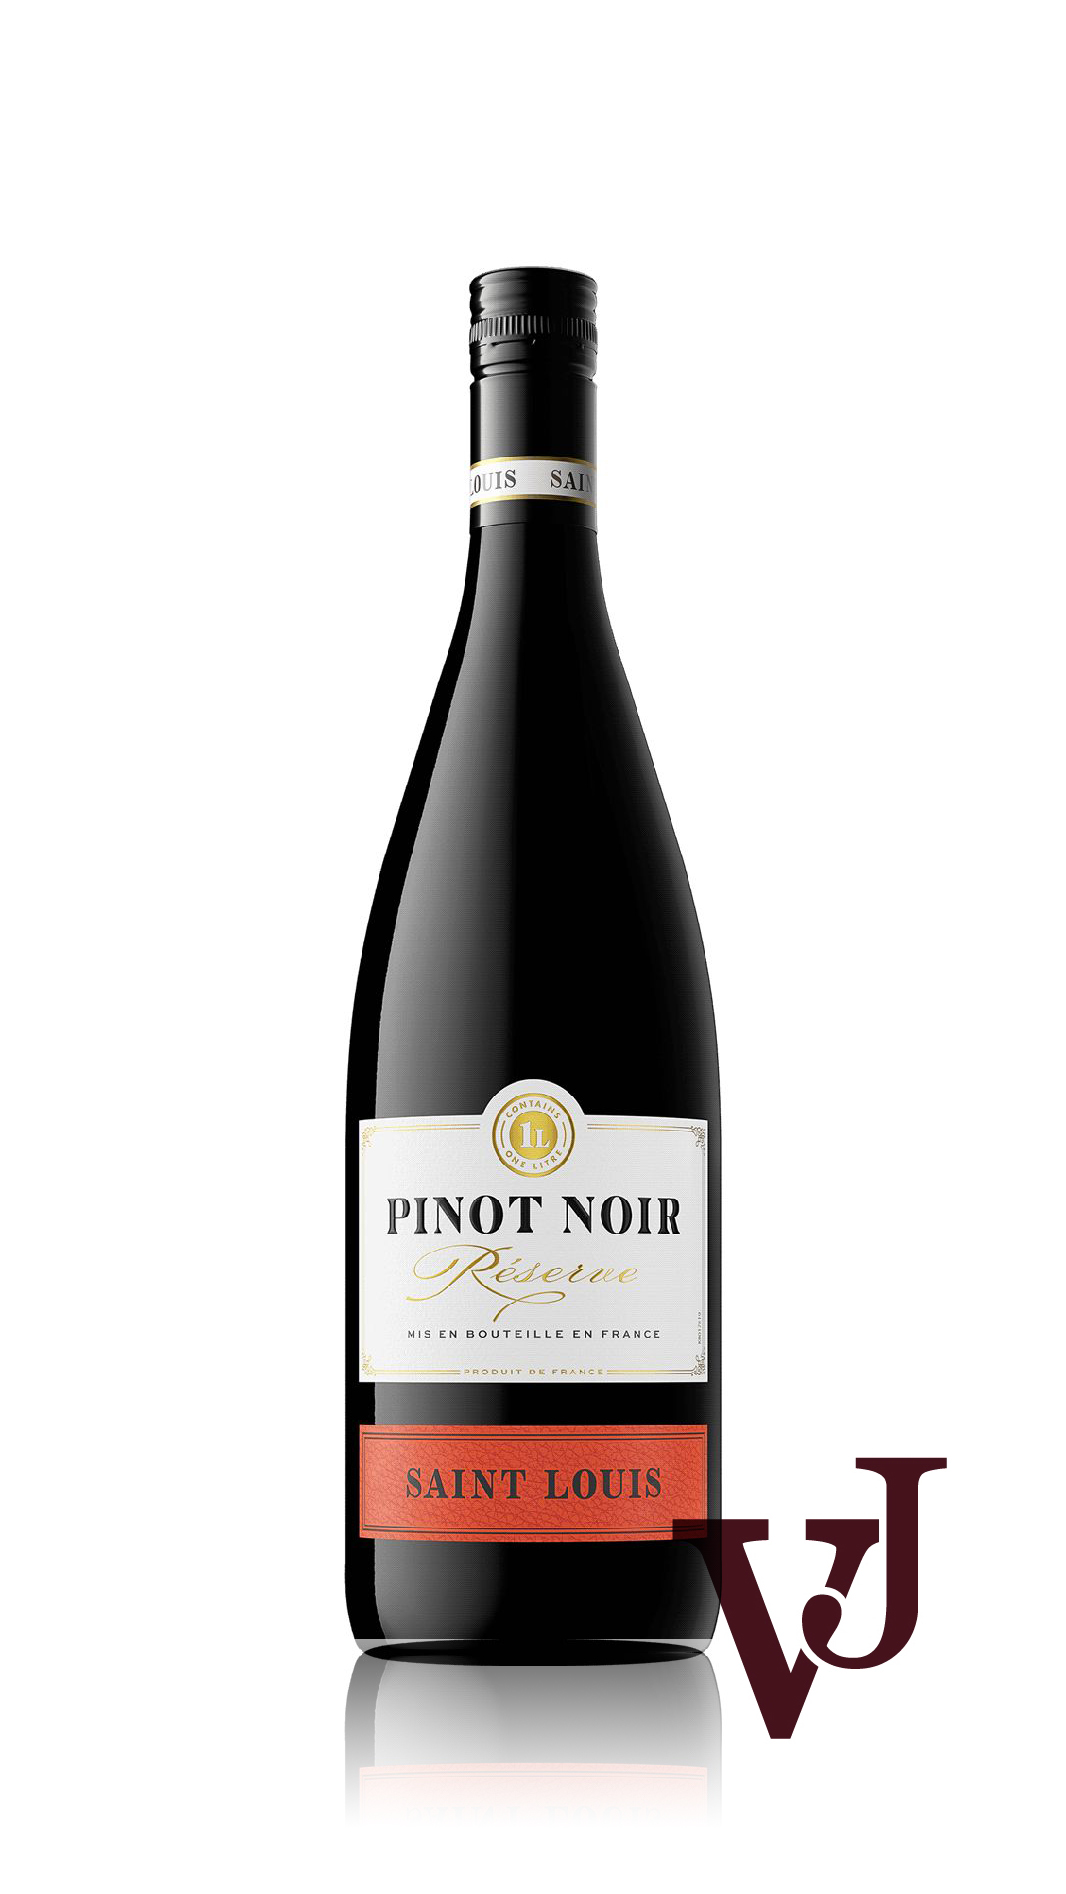 Saint Louis Pinot Noir